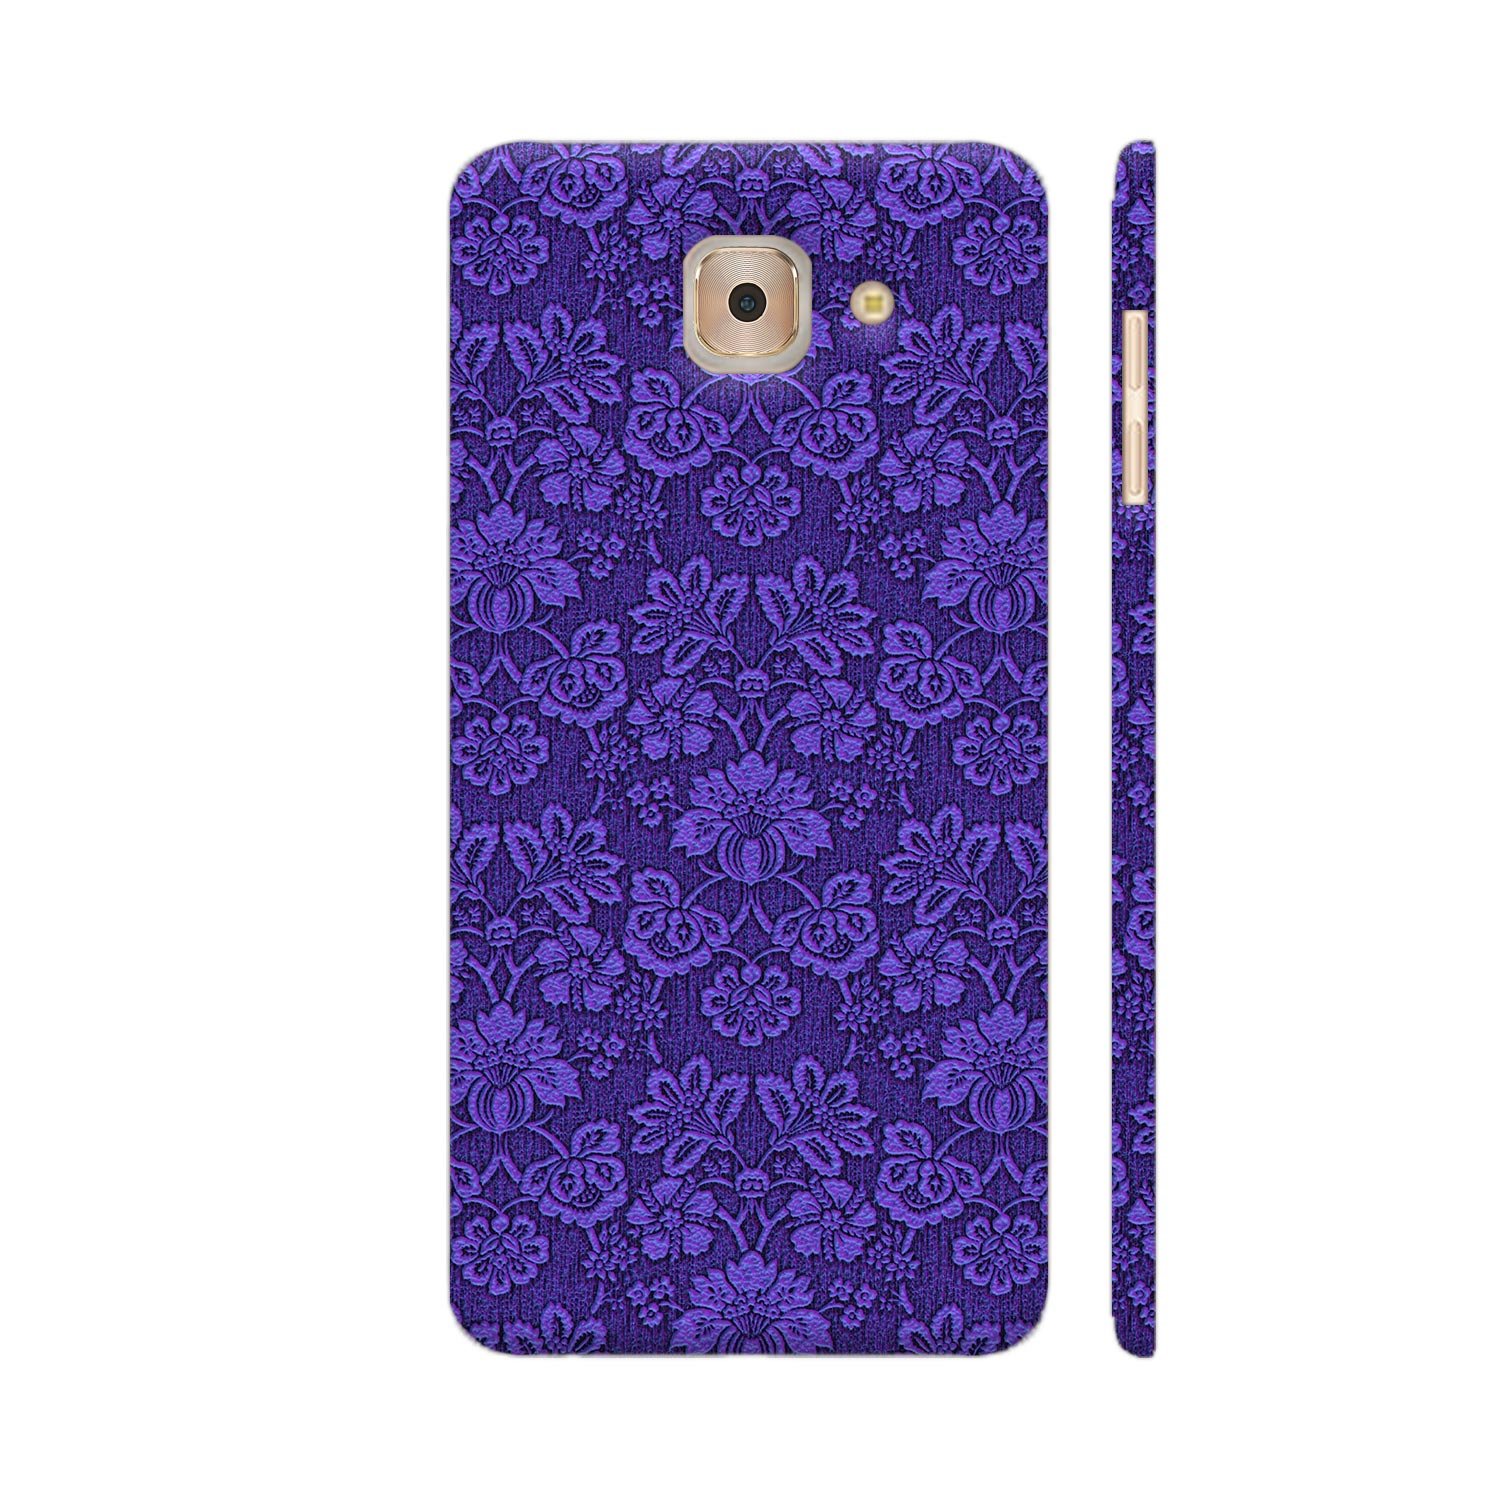 samsung j7 fondo de pantalla,caja del teléfono móvil,violeta,púrpura,azul eléctrico,tecnología